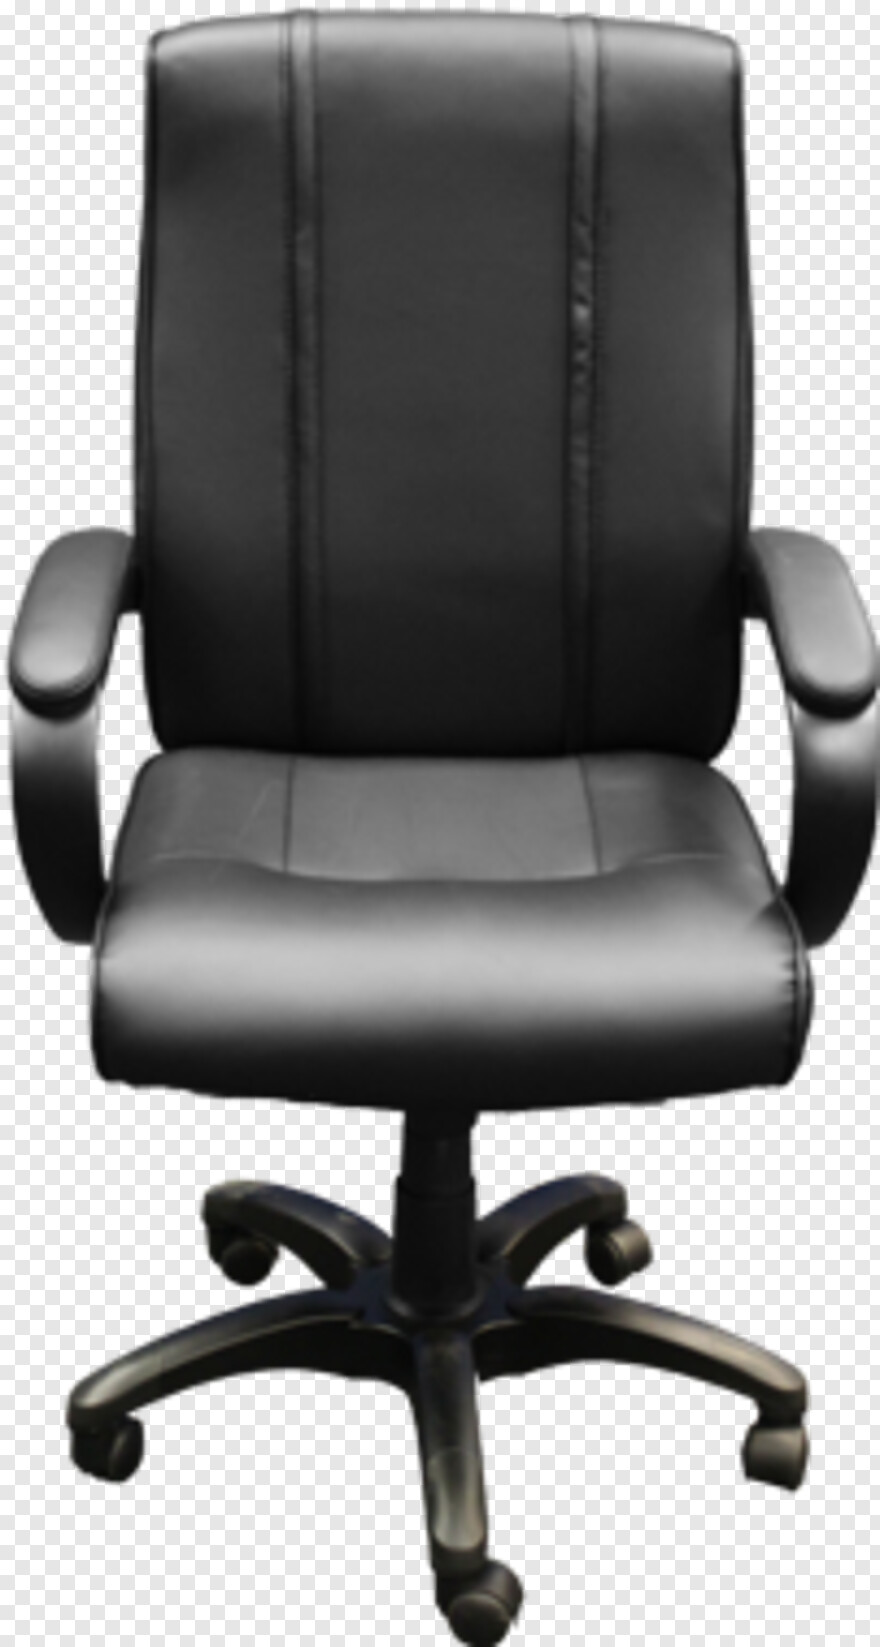  Office Chair, Person Sitting In Chair, Chair, Folding Chair, Denver Nuggets Logo, King Chair